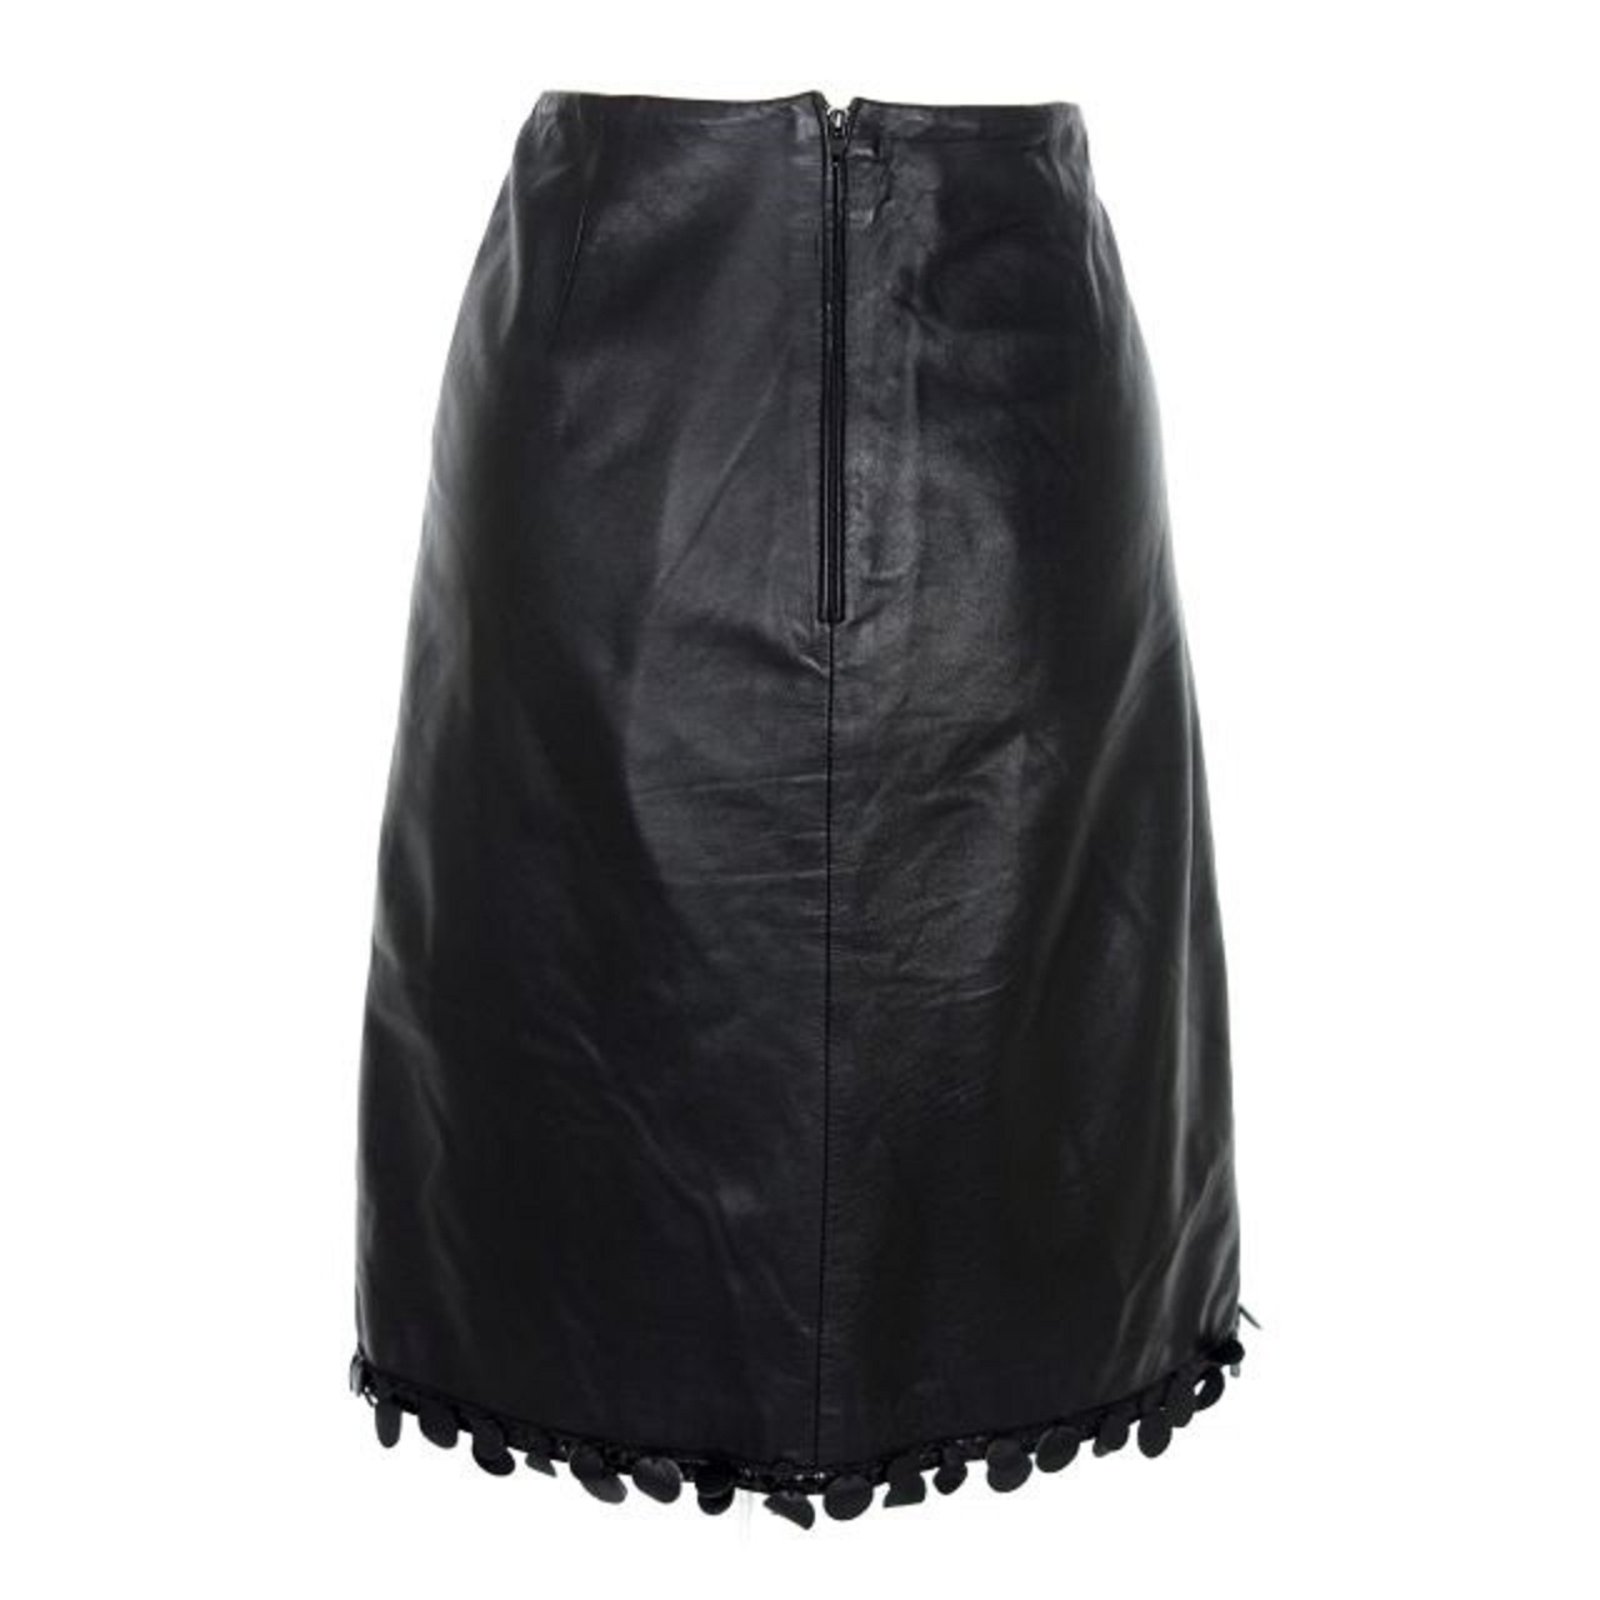 Autre Marque Fabrizio Corsi Leather Skirt Black | LUXE et VENTE